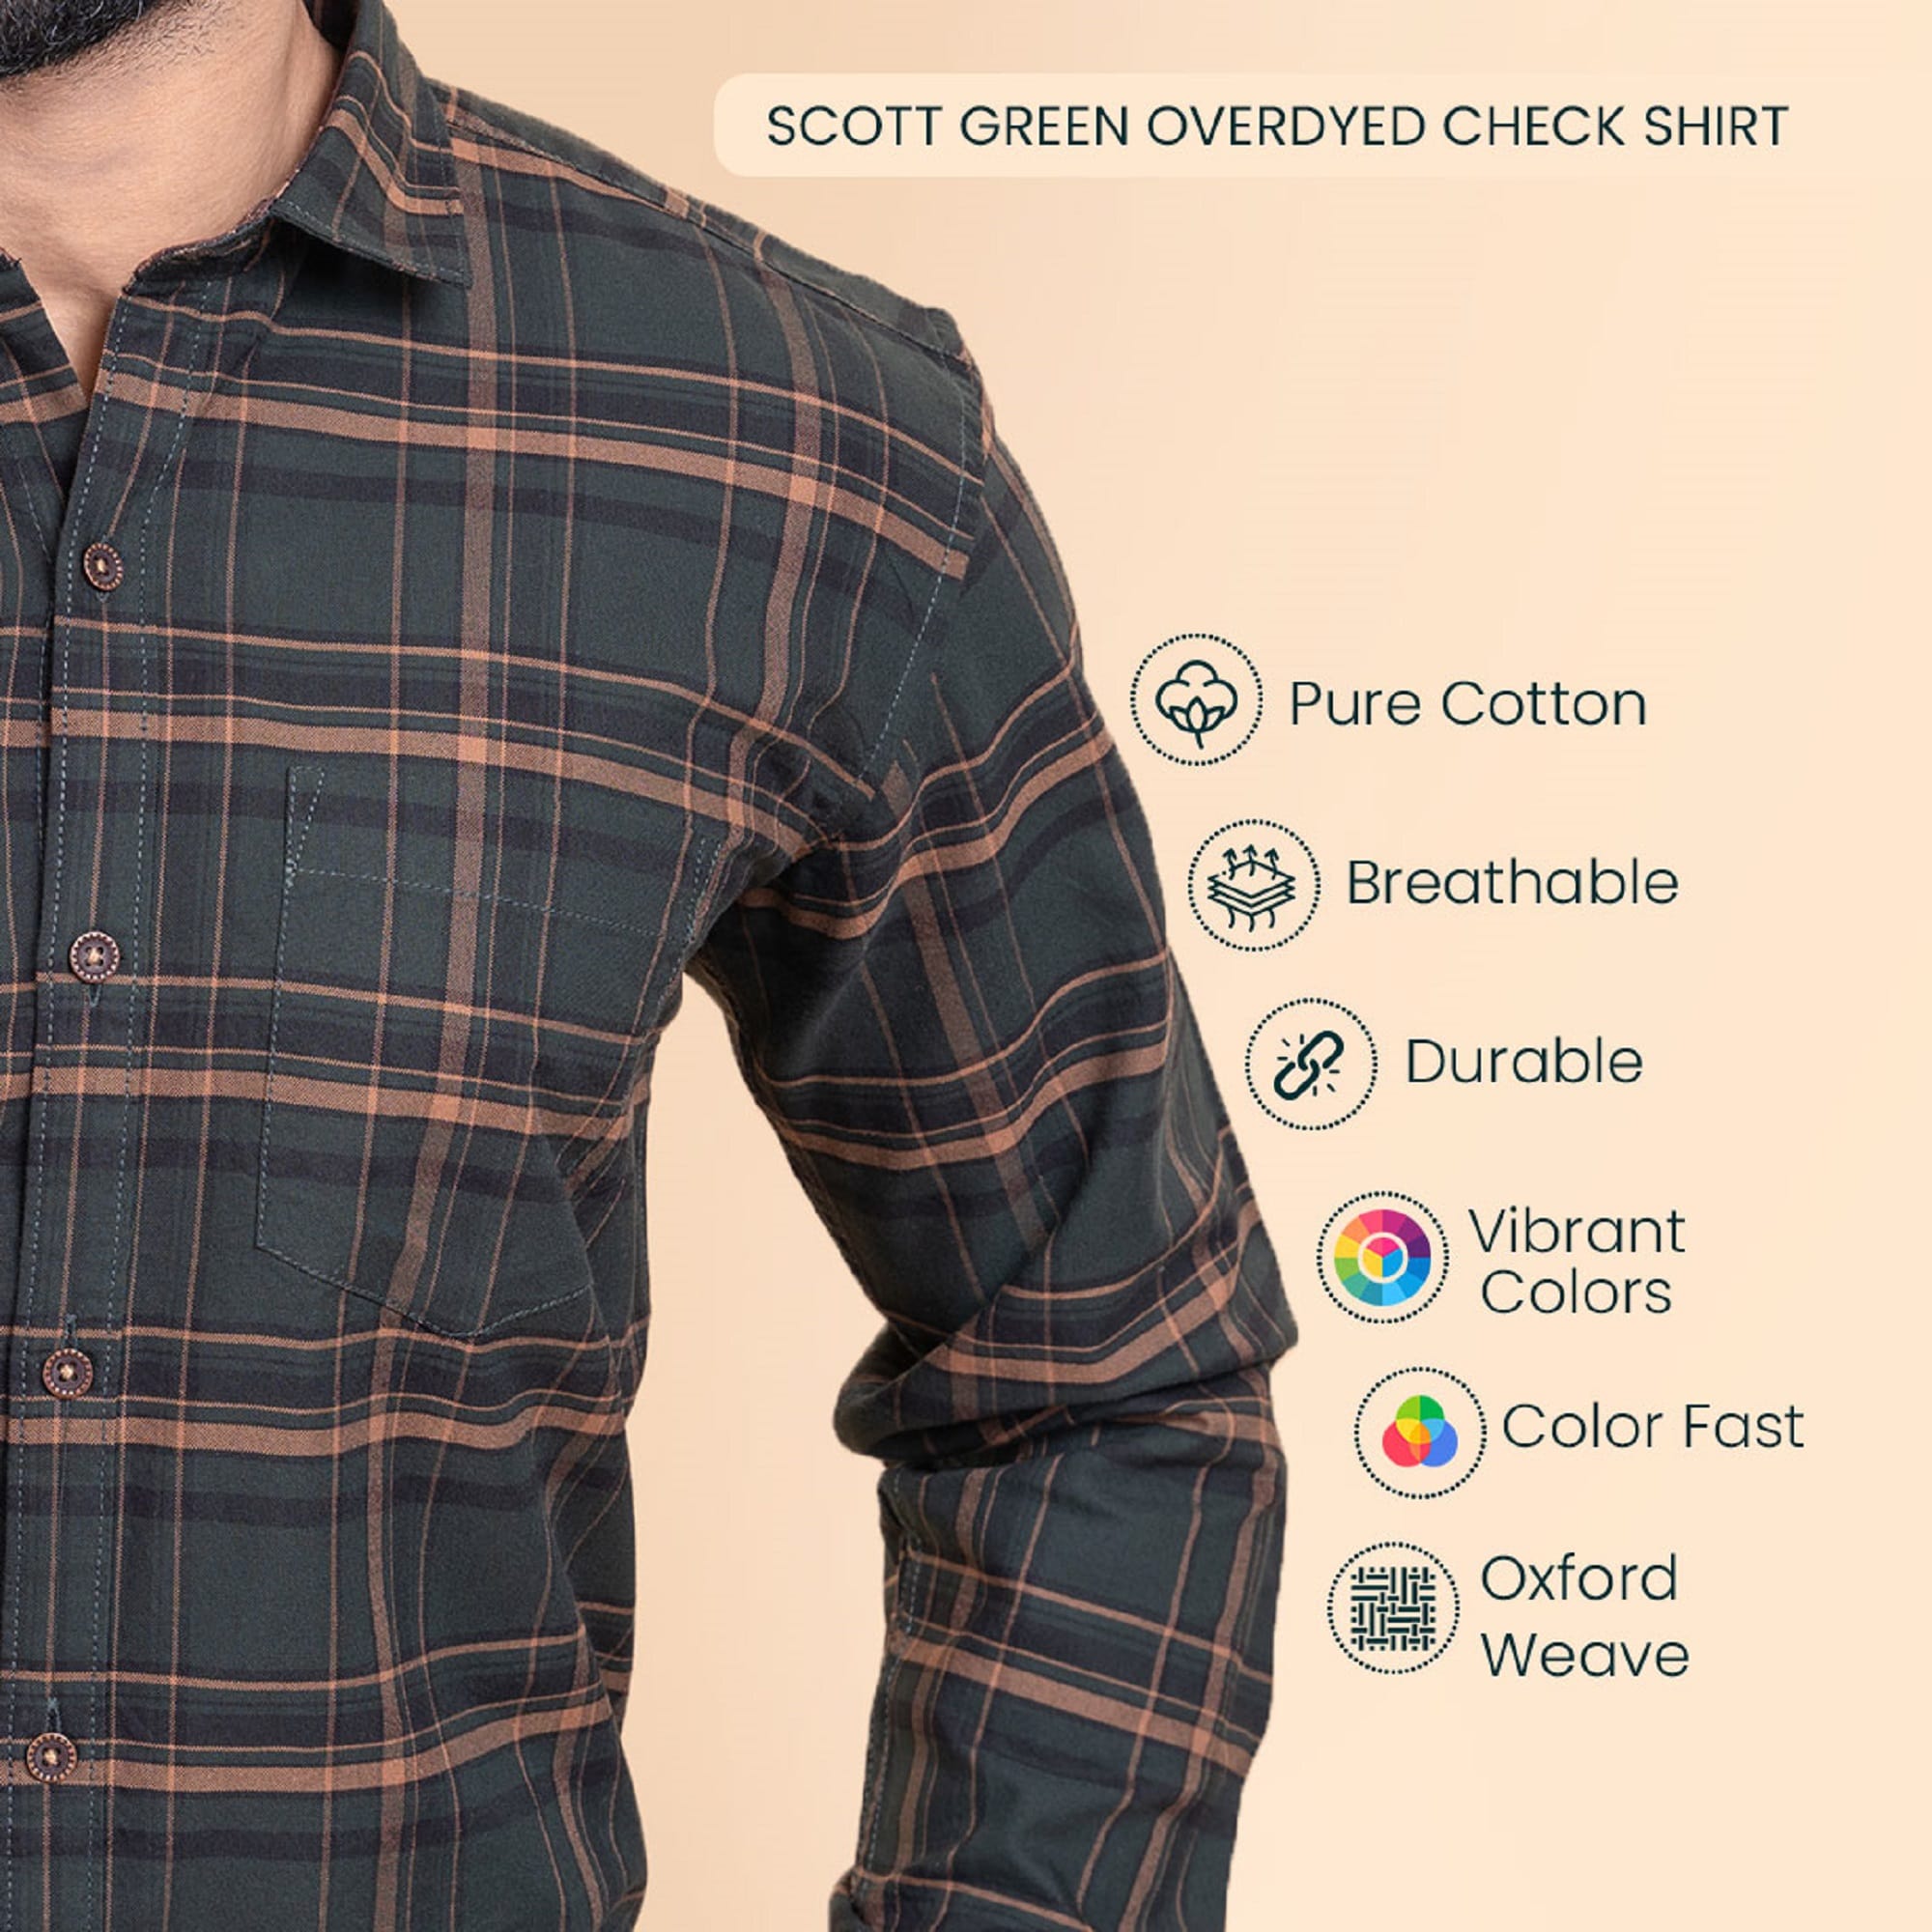 Scott Green Overdyed Check Shirt